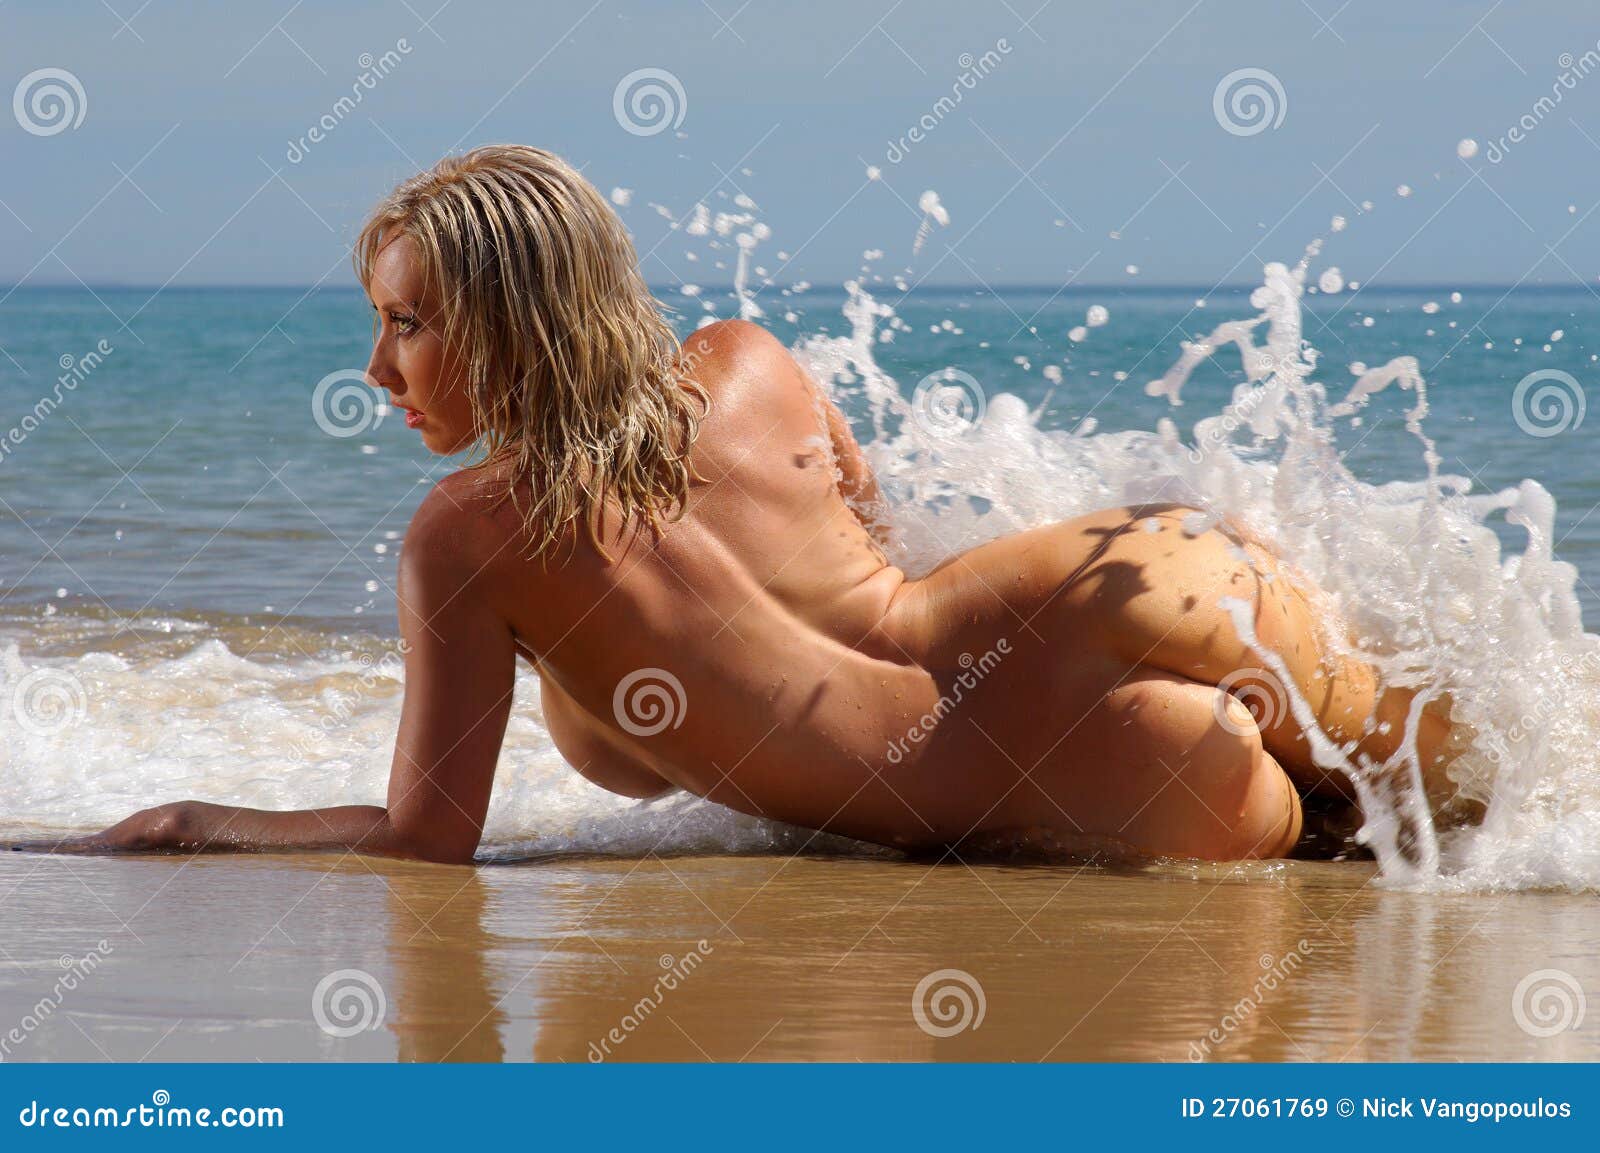 nude sexy girls in beach